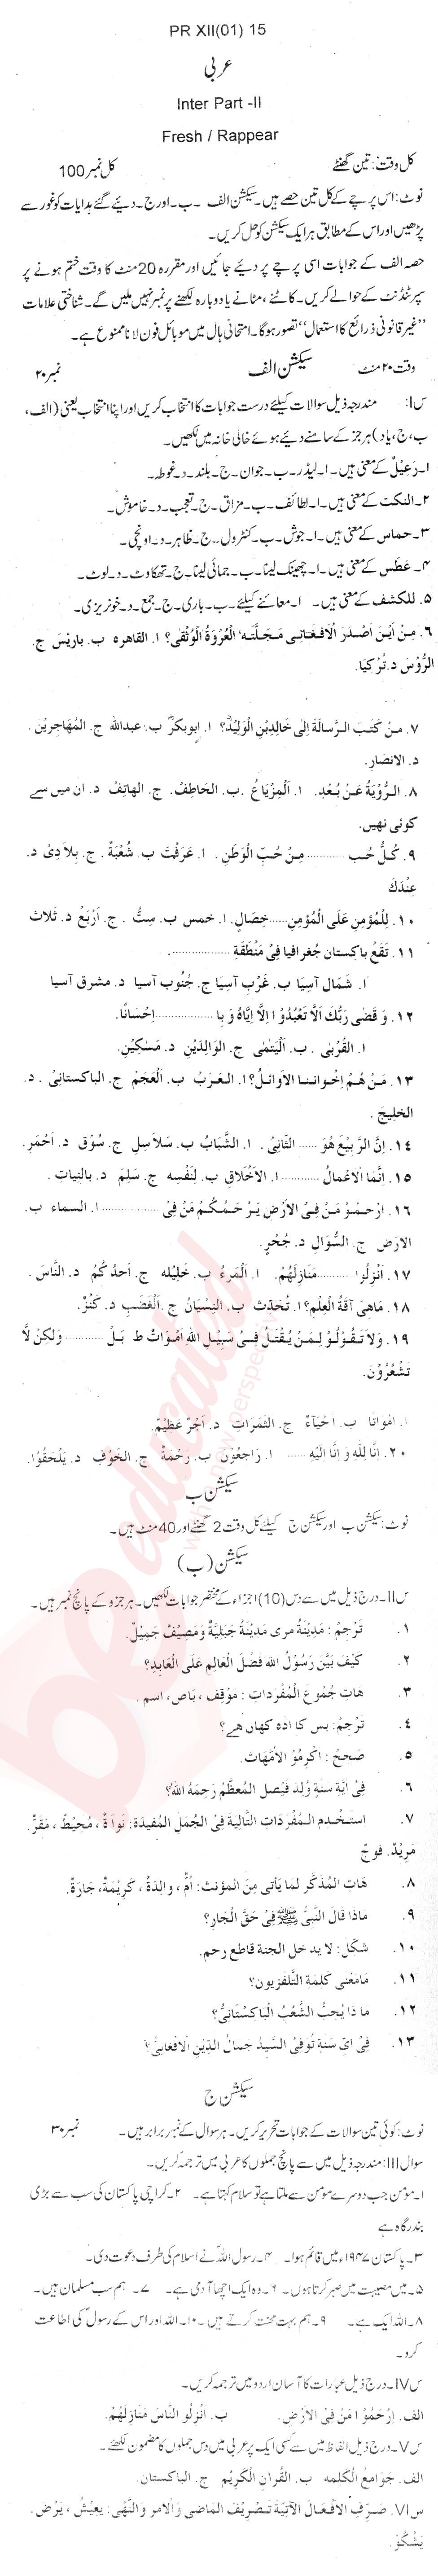 Arabic FA Part 2 Past Paper Group 1 BISE Bannu 2015